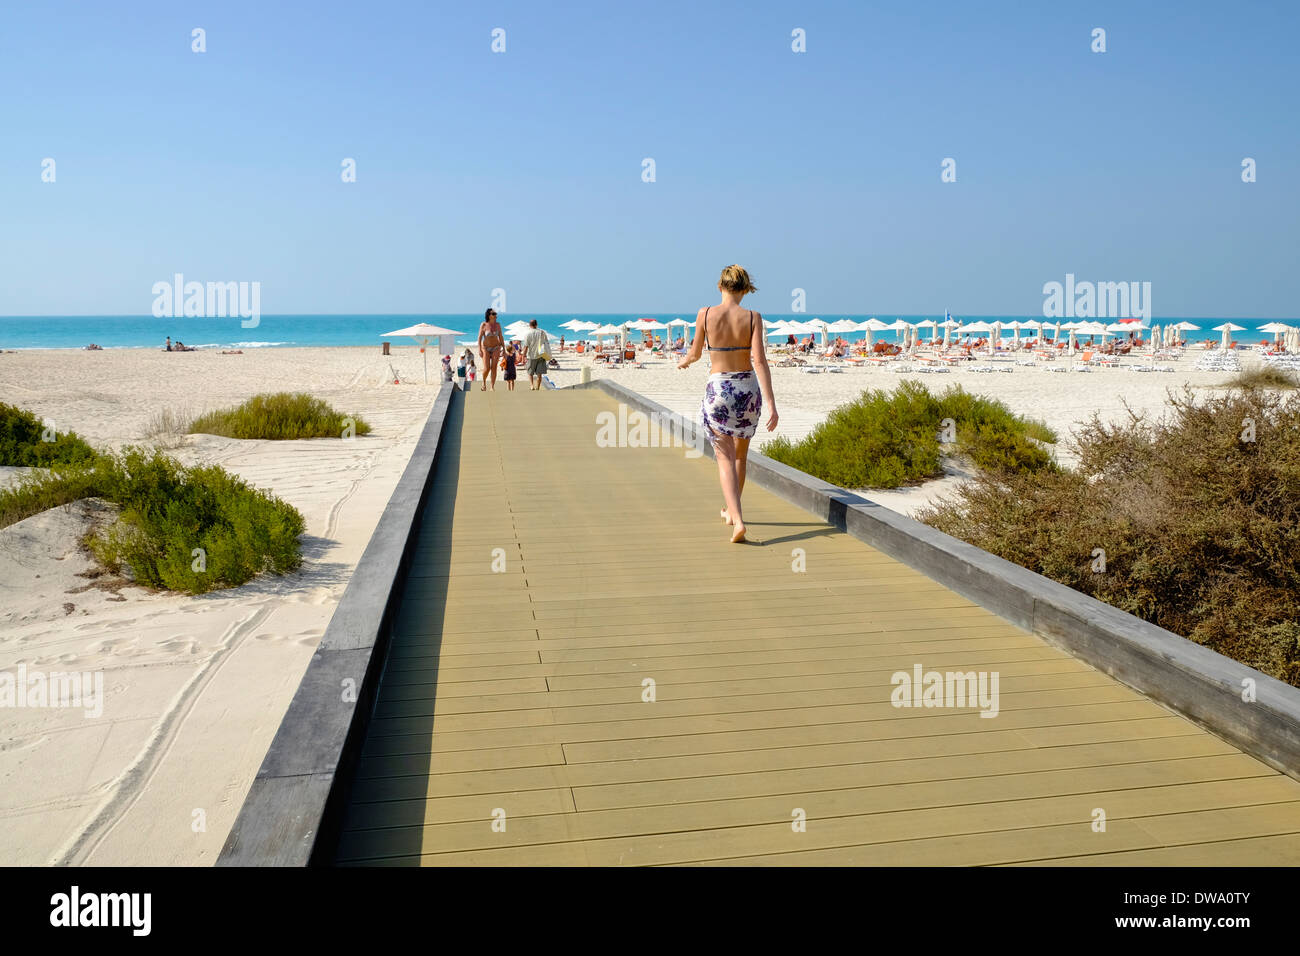 Spiaggia pubblica dell'isola Saadiyat ad Abu Dhabi Emirati Arabi Uniti. Foto Stock